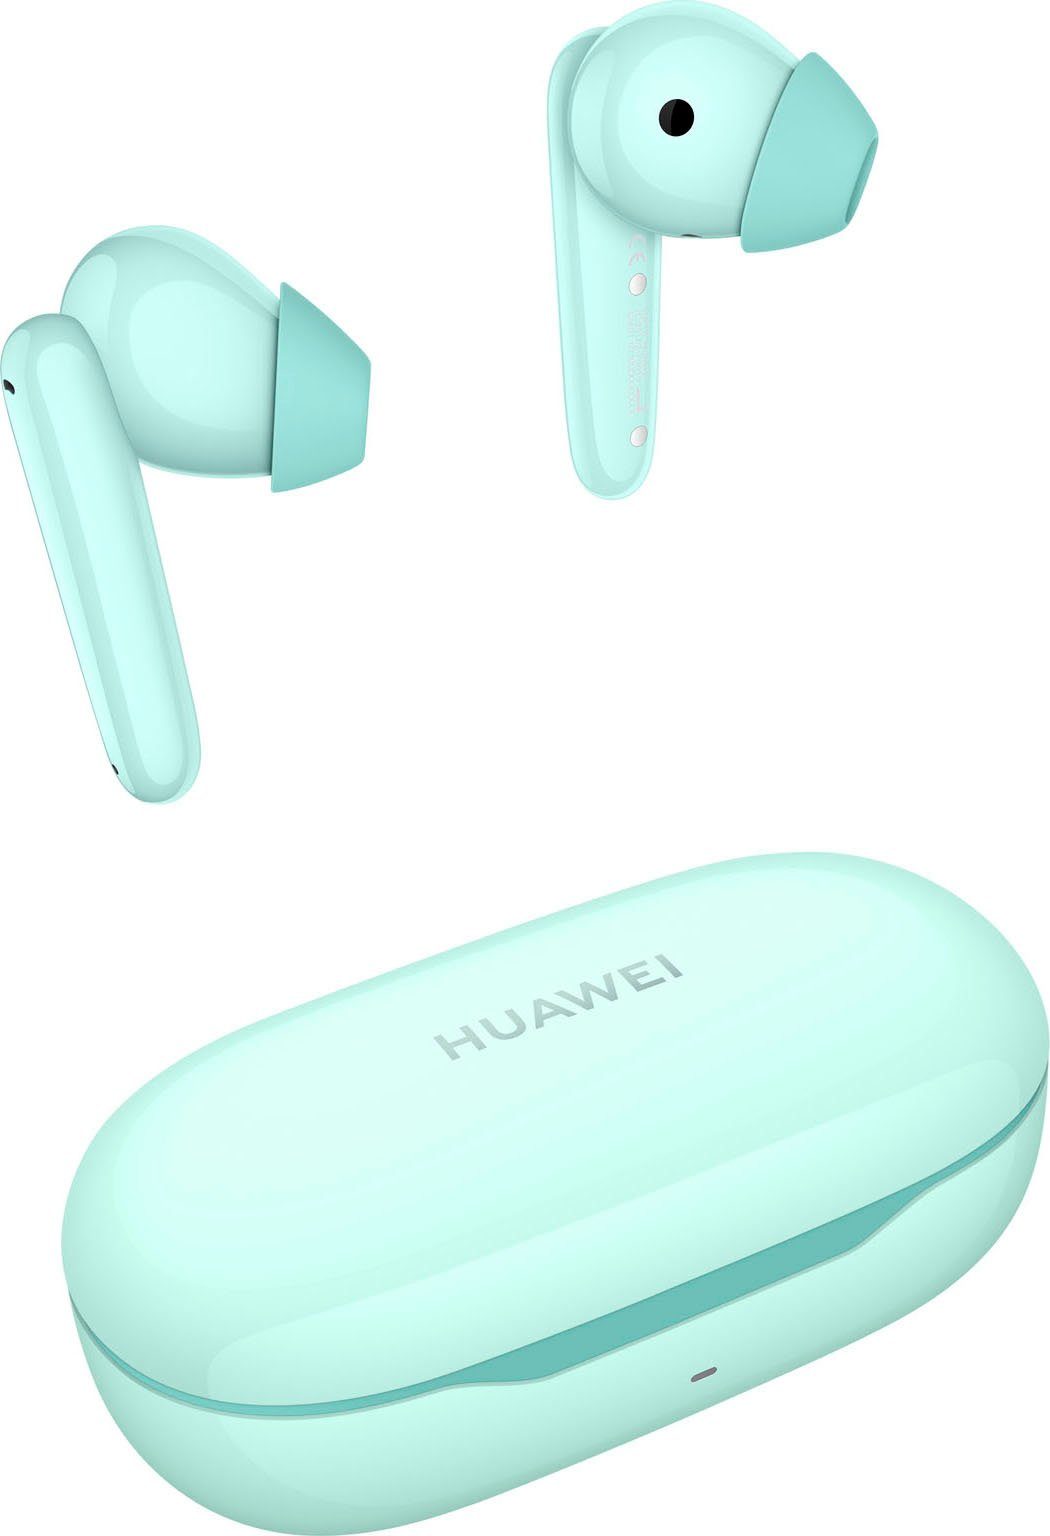 FreeBuds Blau SE Sound, Huawei wireless In-Ear-Kopfhörer (Premium-Design, Kristallklarer Akkulaufzeit) Lange